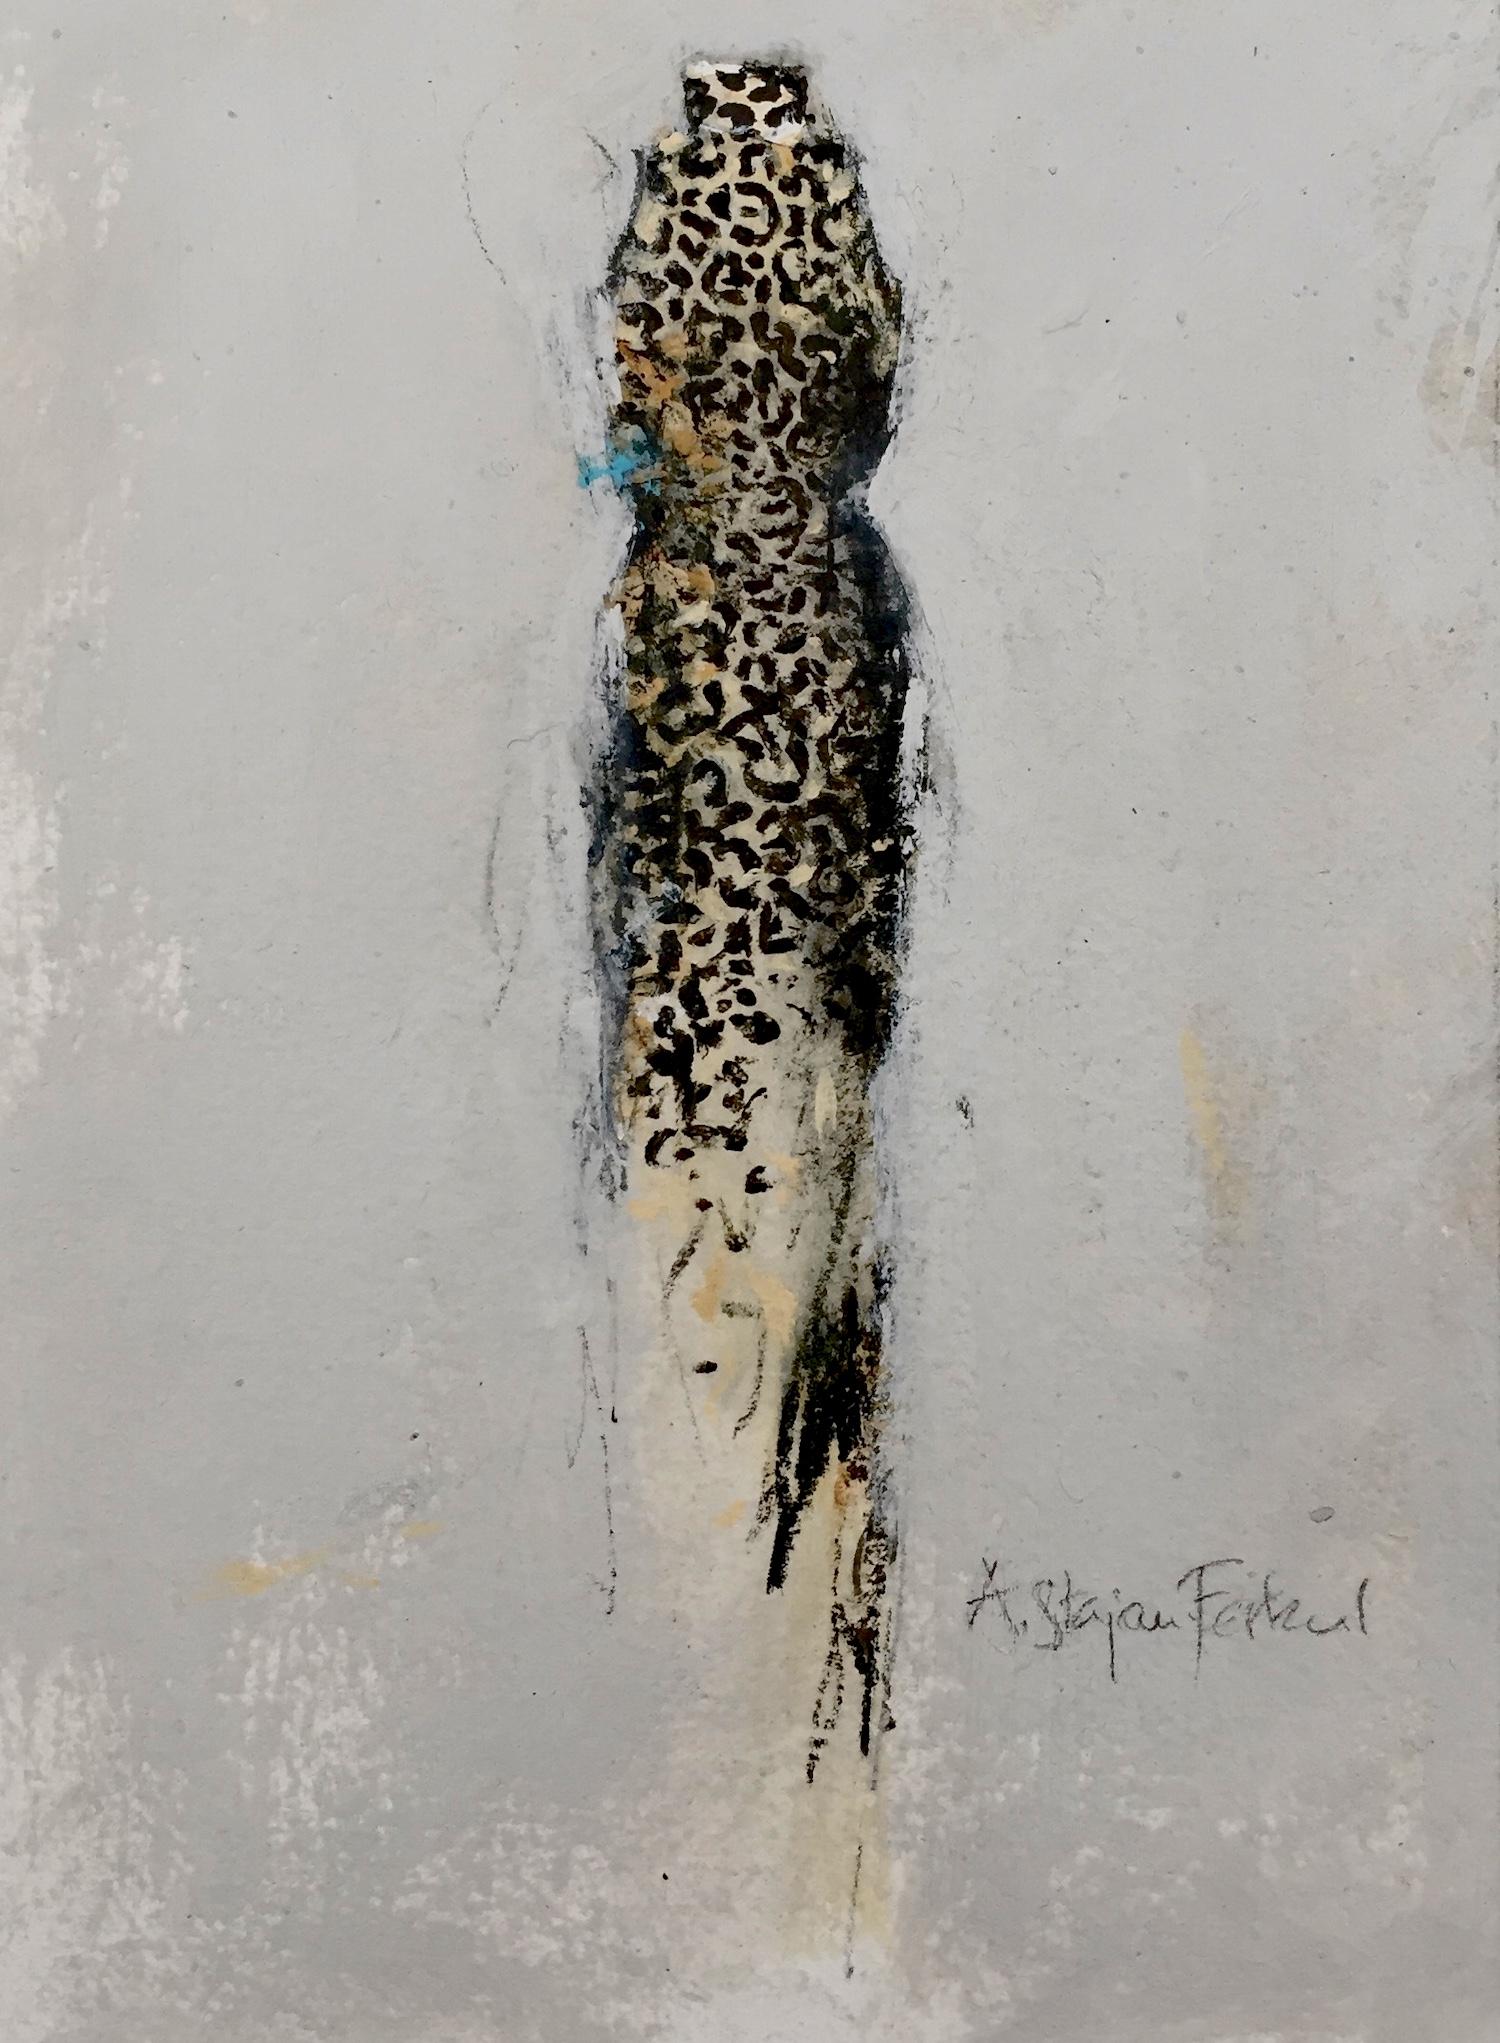 Andrea Stajan-Ferkul Figurative Art - The Dressing Room 4, Artwork On Paper. Leopard Print Dress (Series)